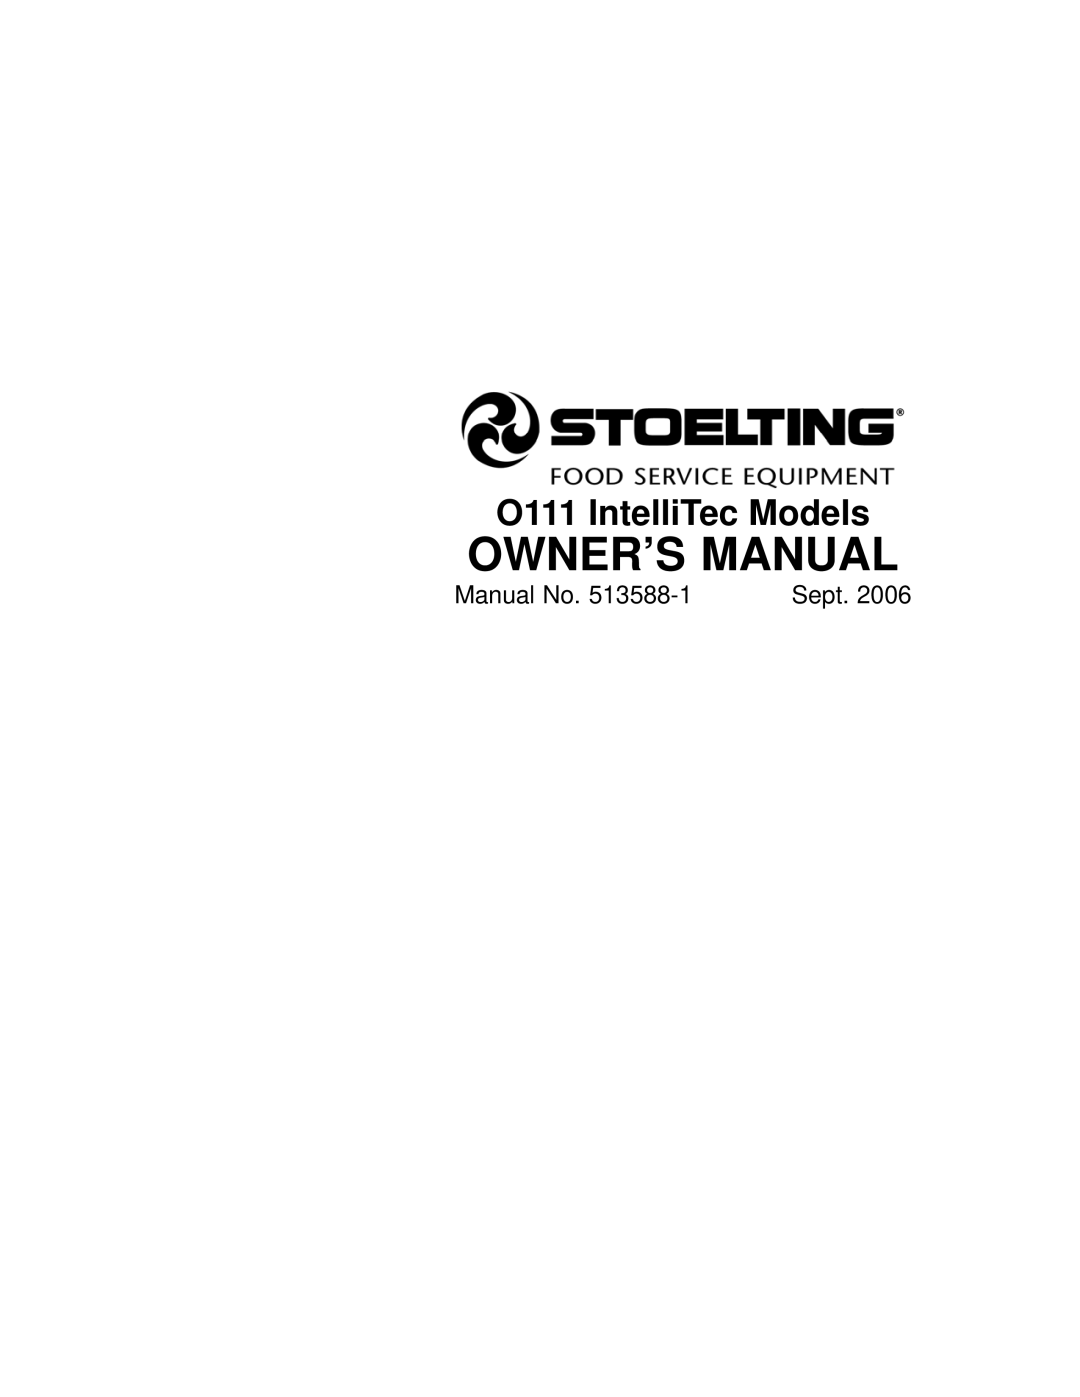 Stoelting owner manual O111 IntelliTec Models 